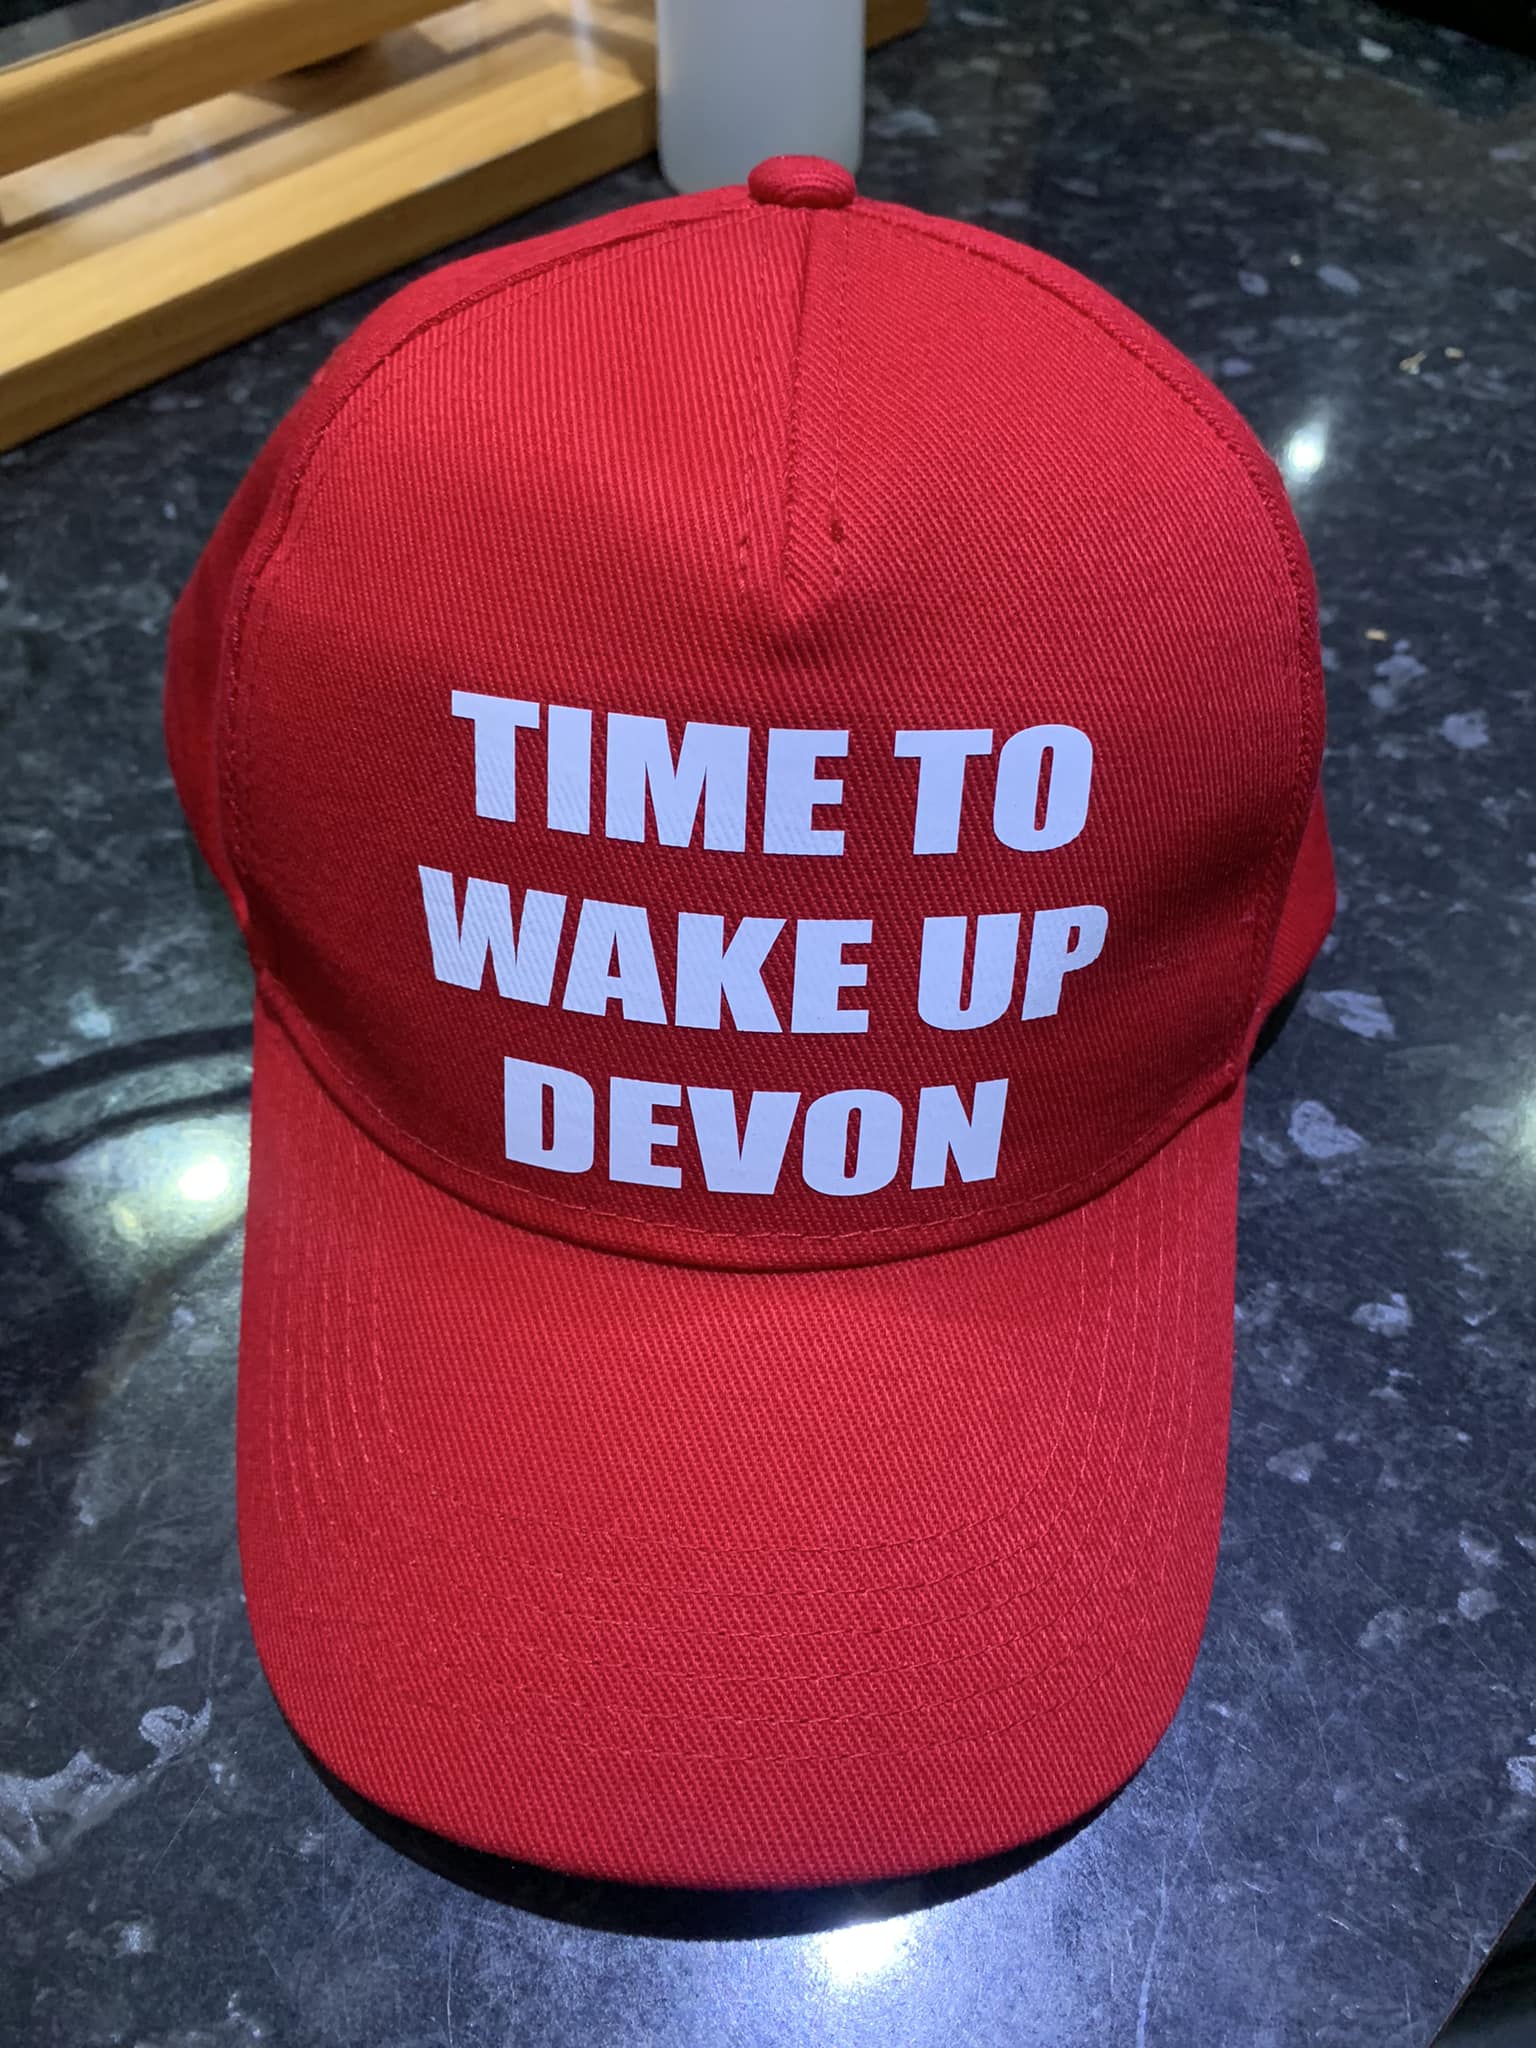 Time to wake up Devon logo